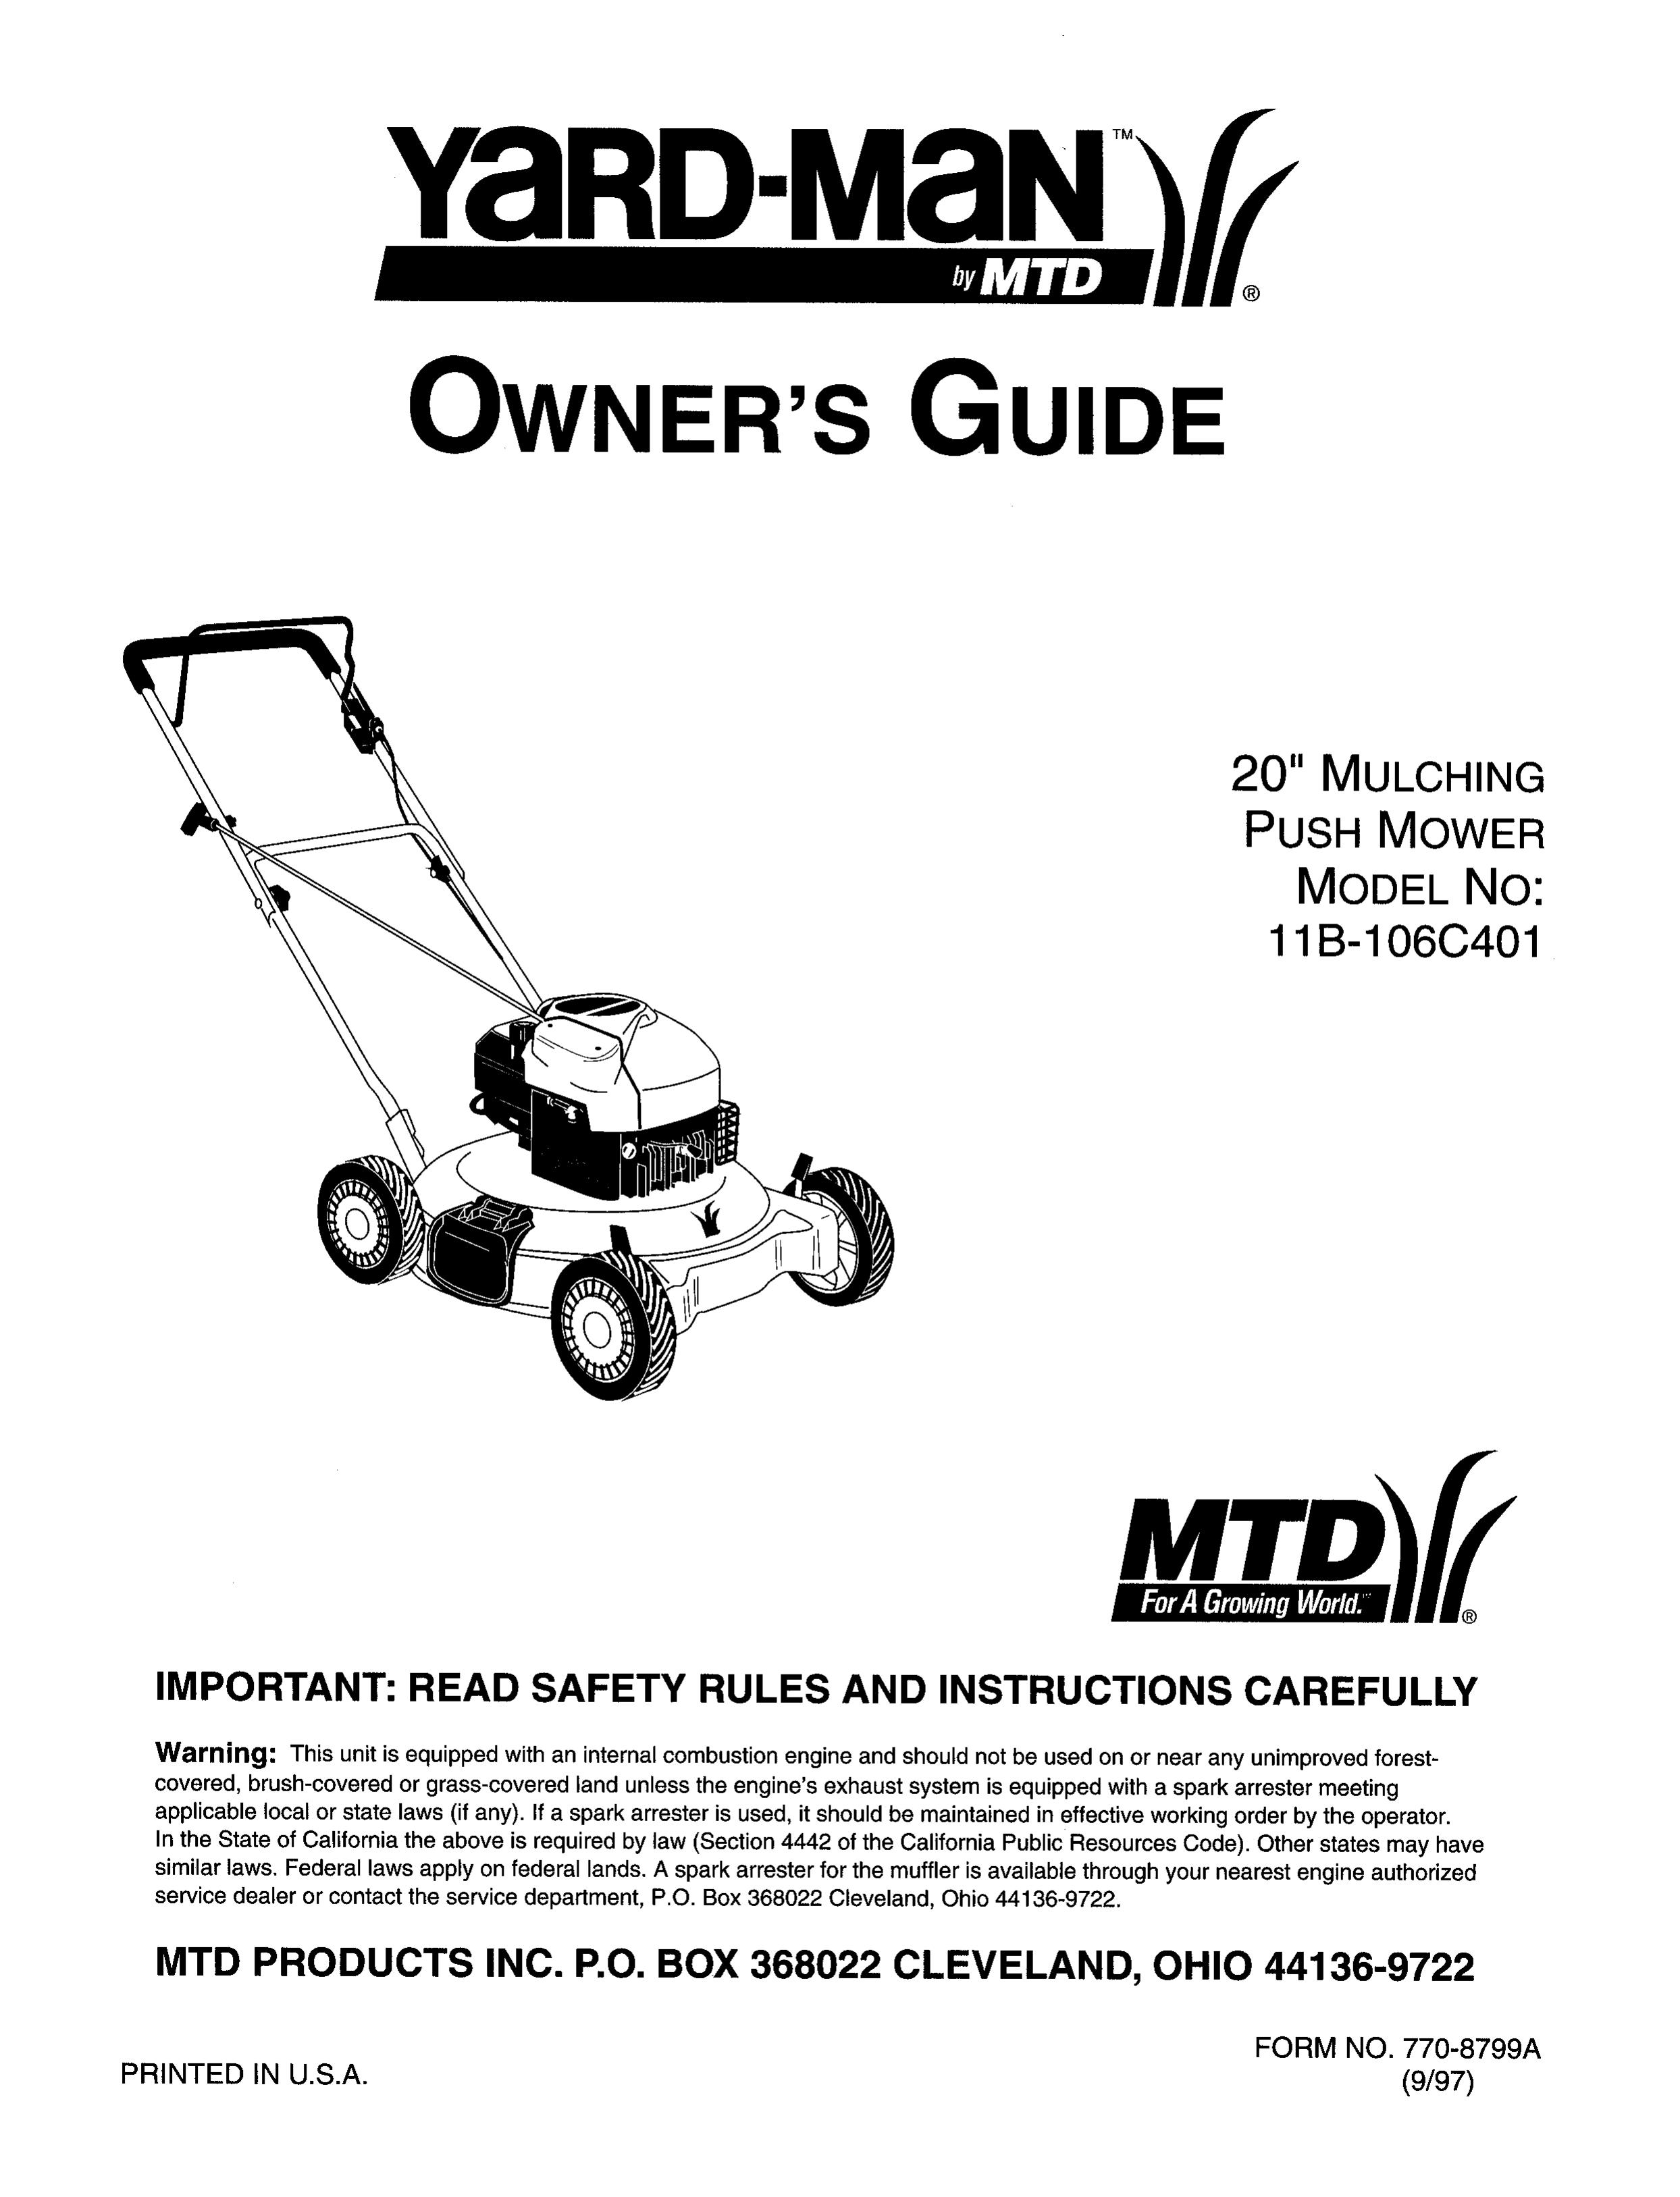 Yard-Man 11B-106C701 Lawn Mower User Manual